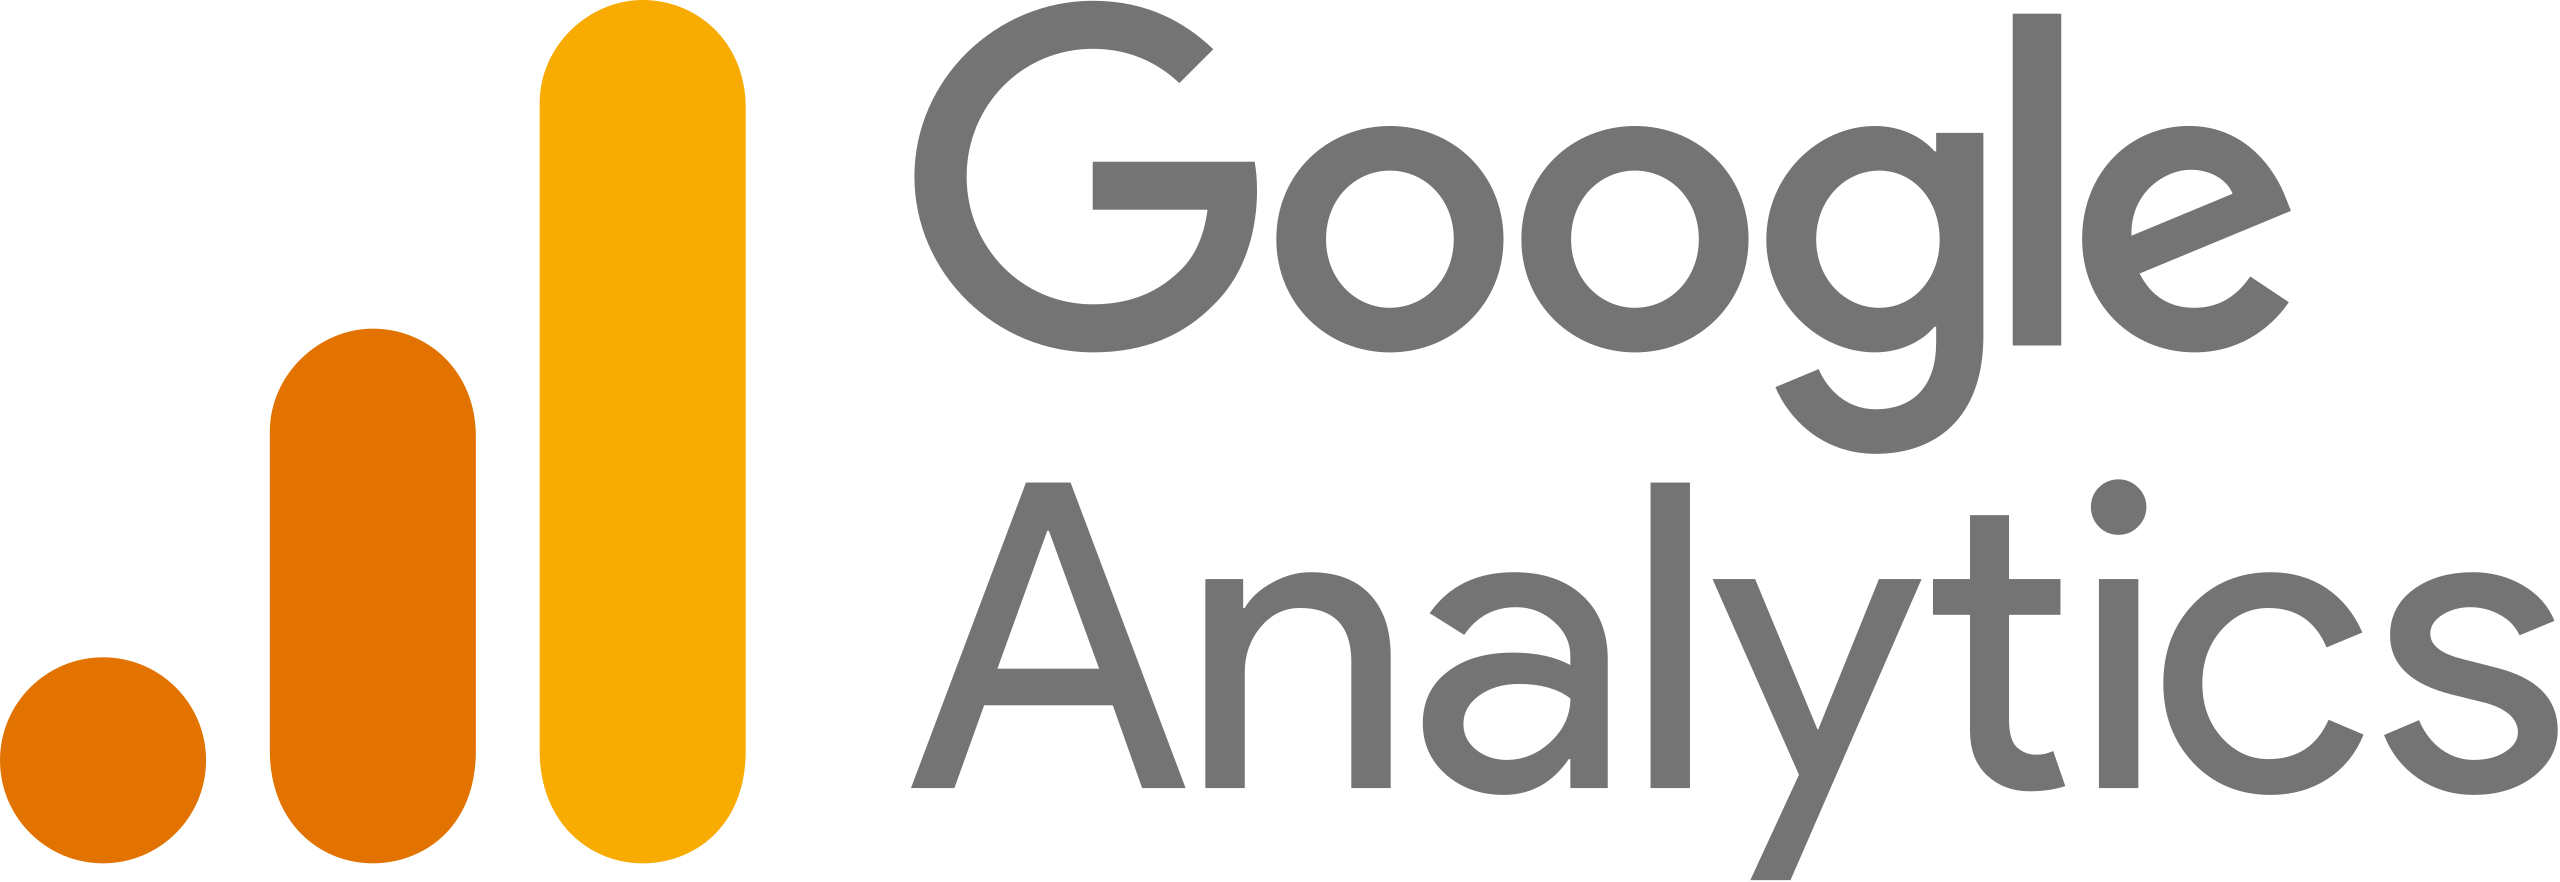 Google Analytics Svg